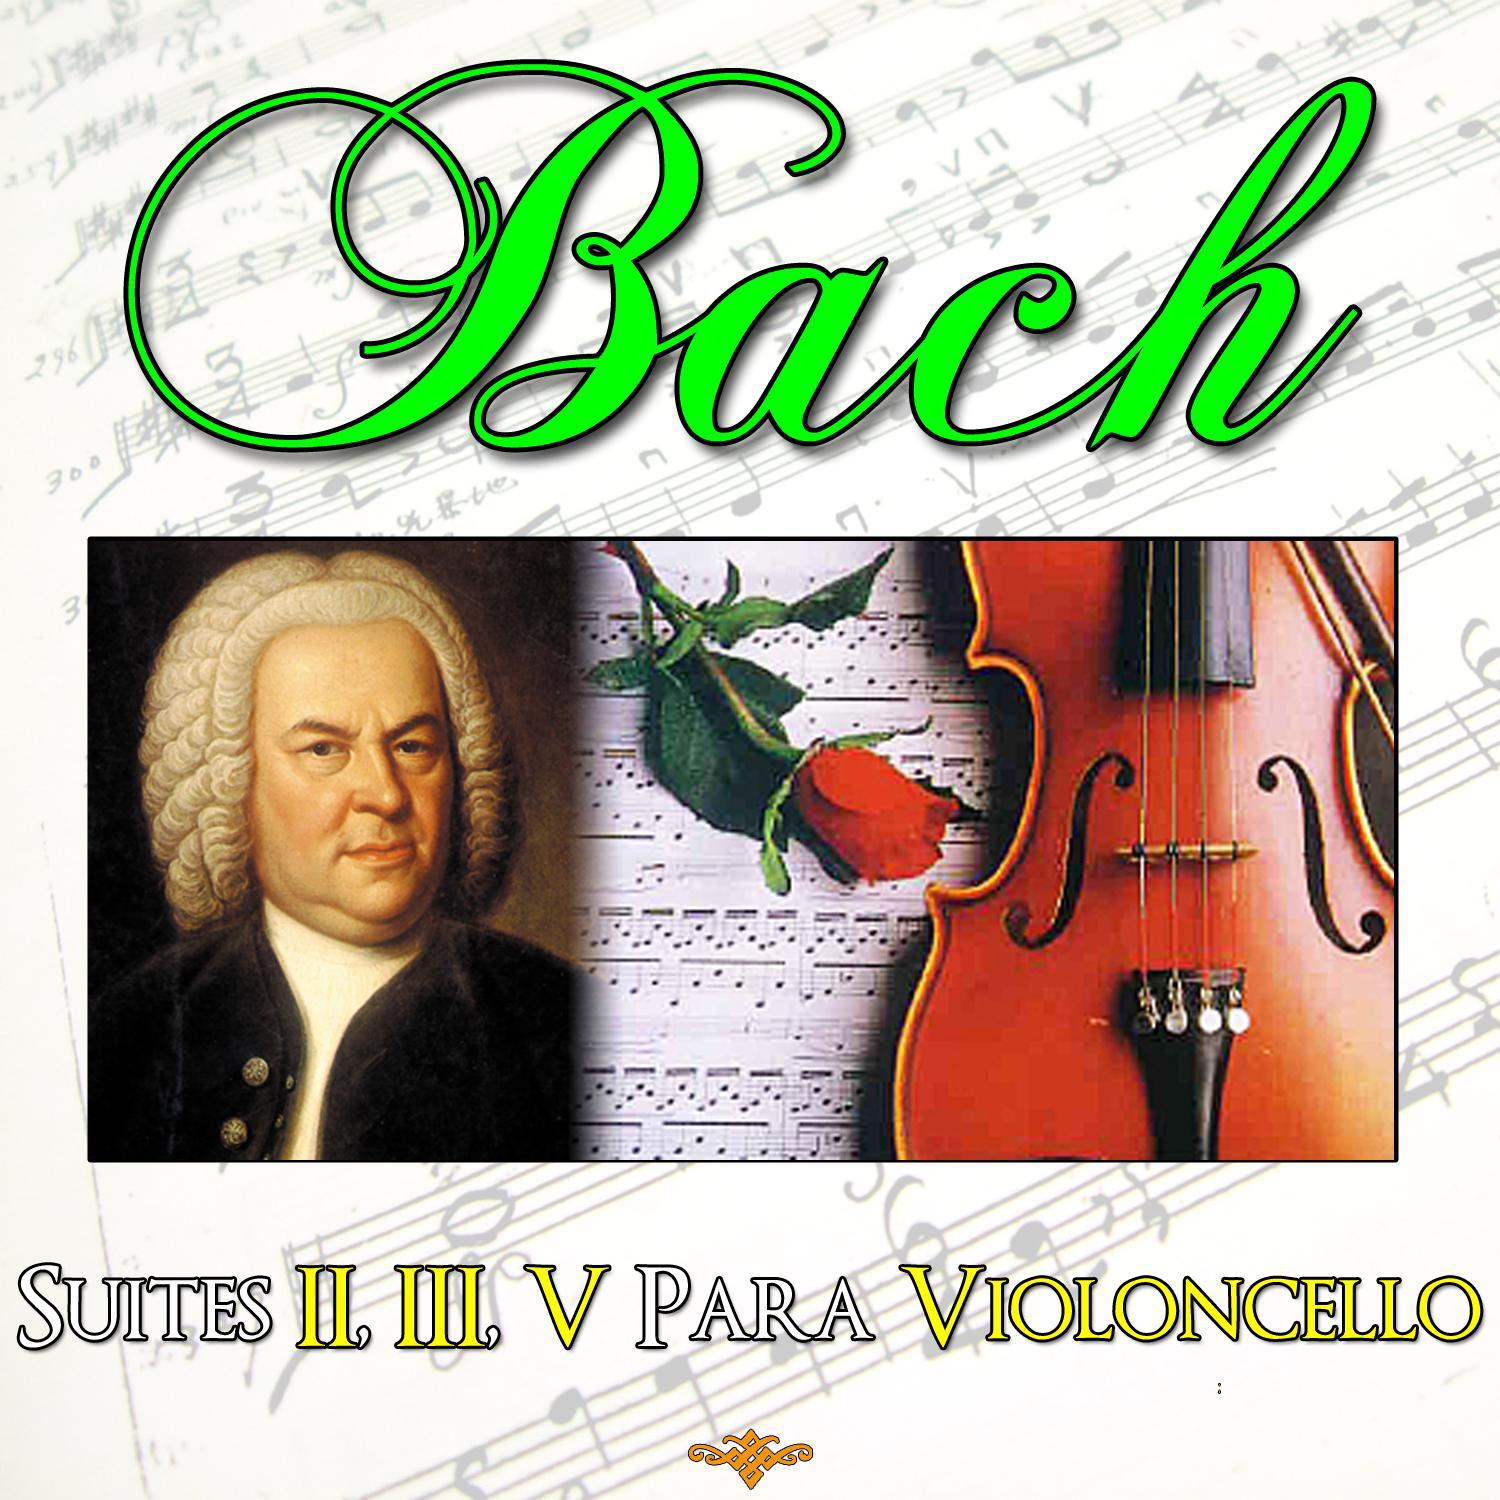 Bach. Suites II, III, V para Violoncello. Mu sica Cla sica